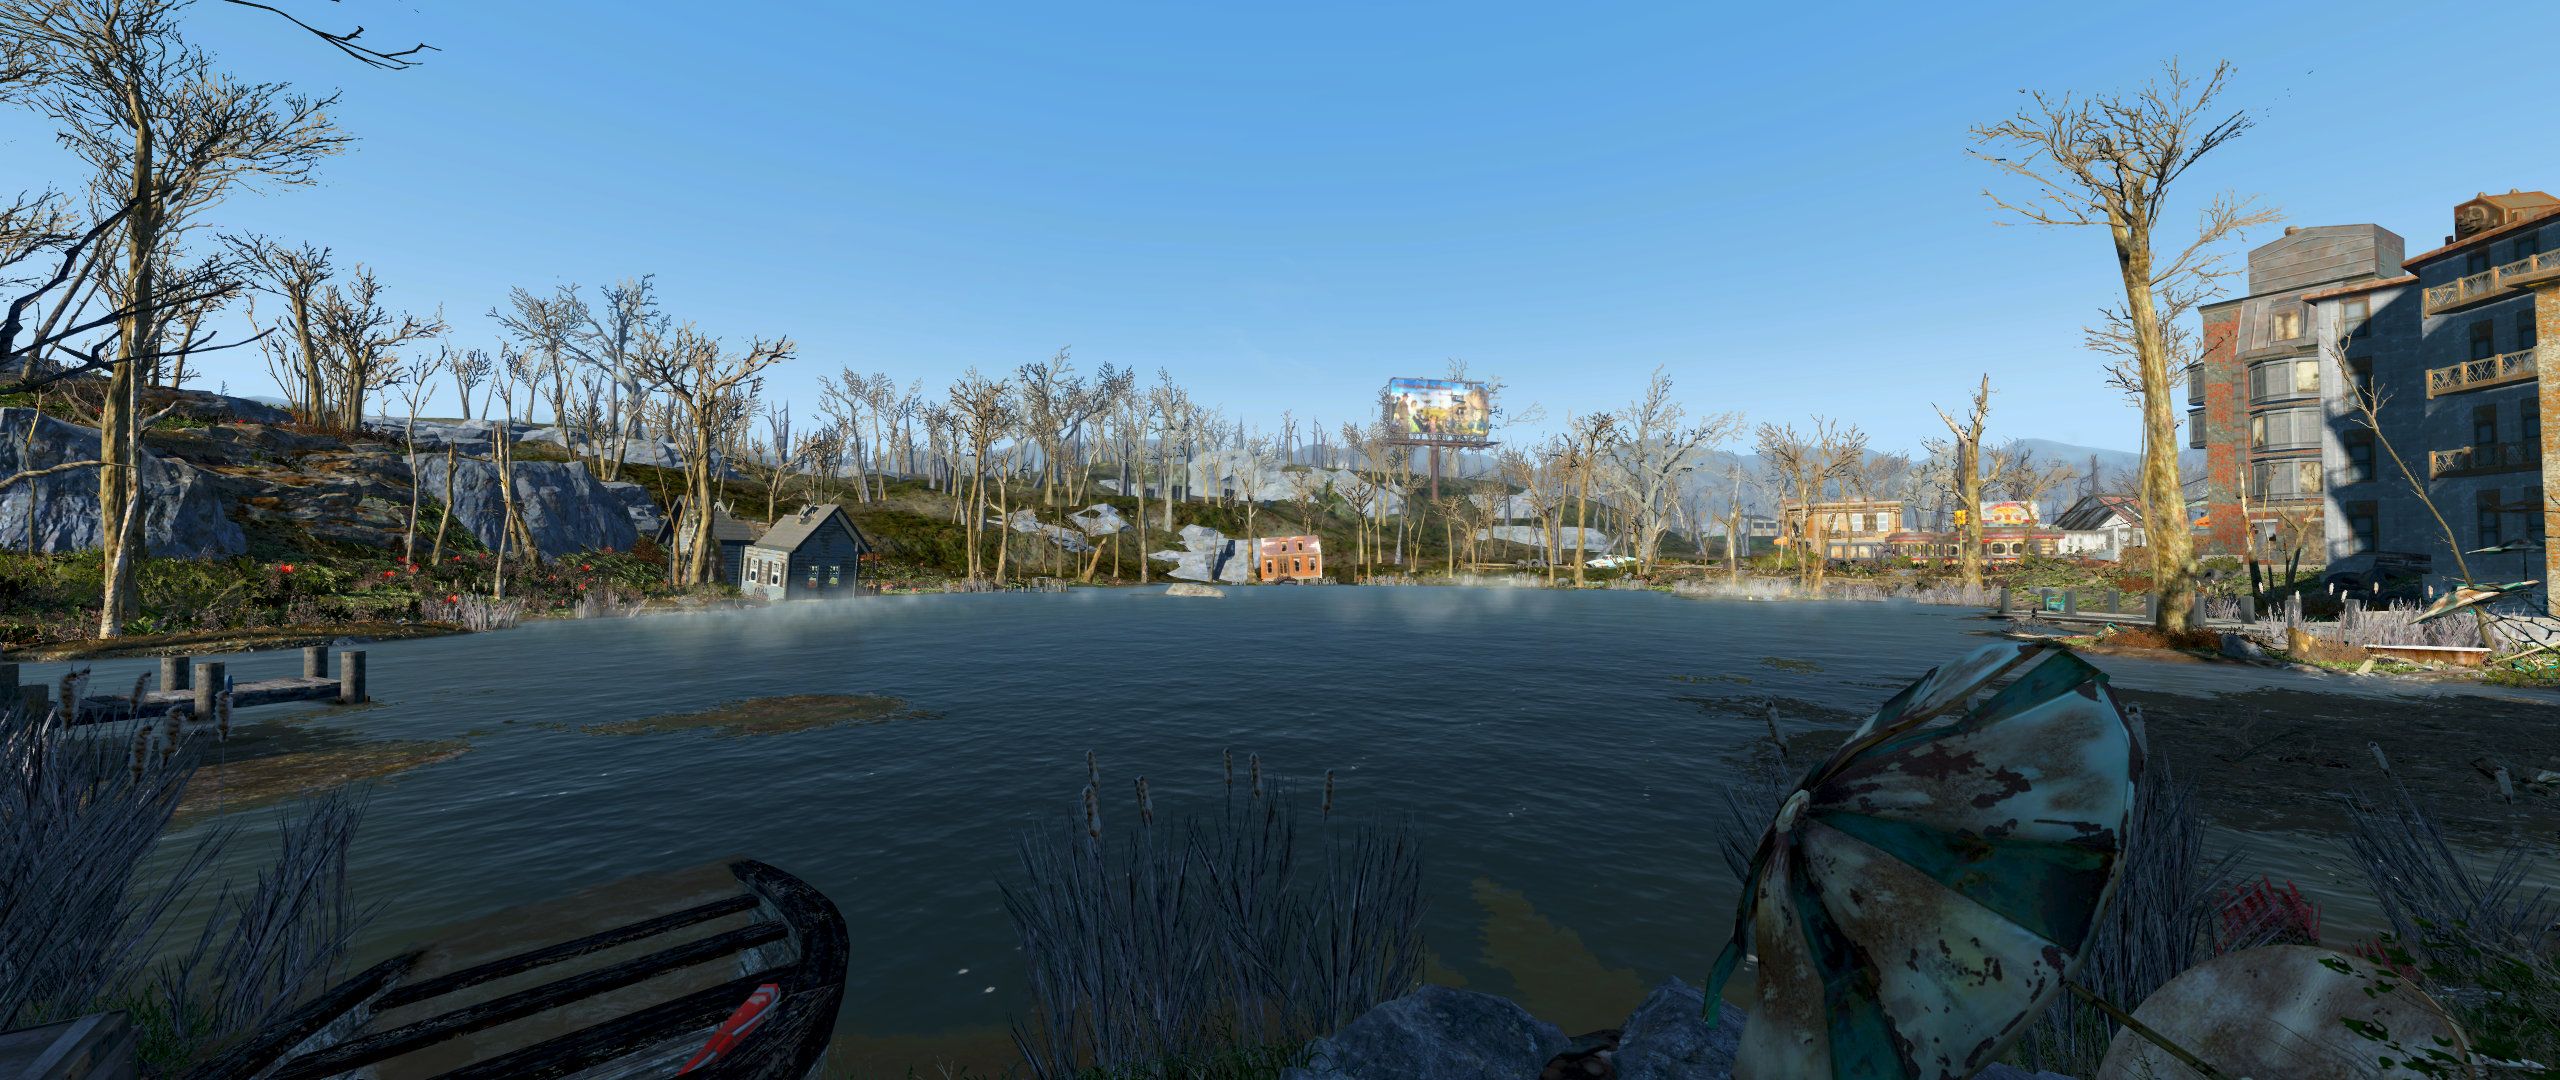 Fallout Fallout 4 Video Game Art Landscape Environment 2560x1080